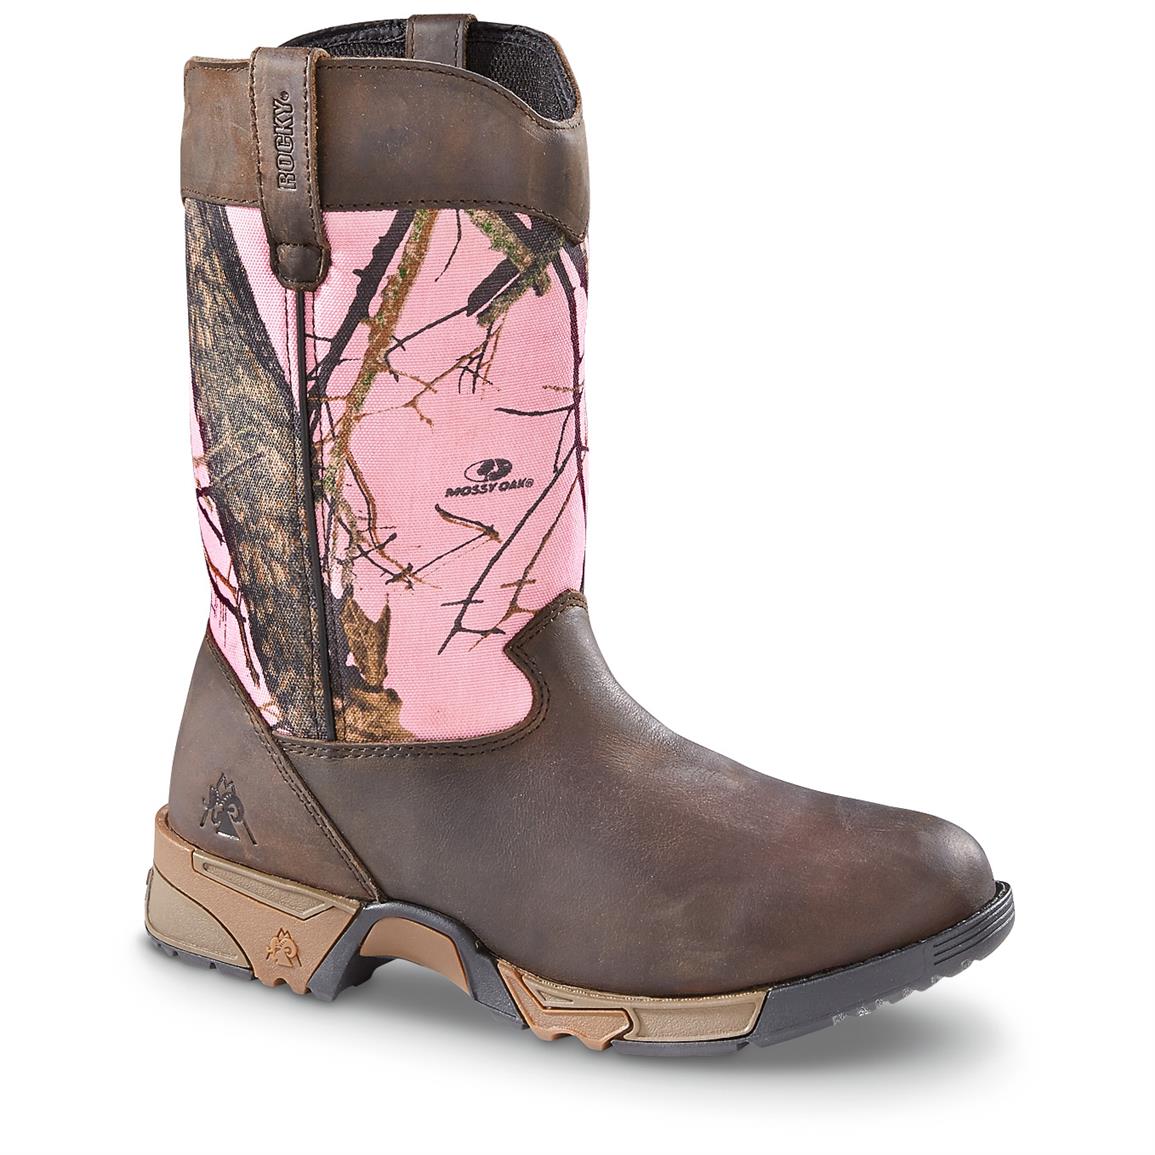 rocky women's boots